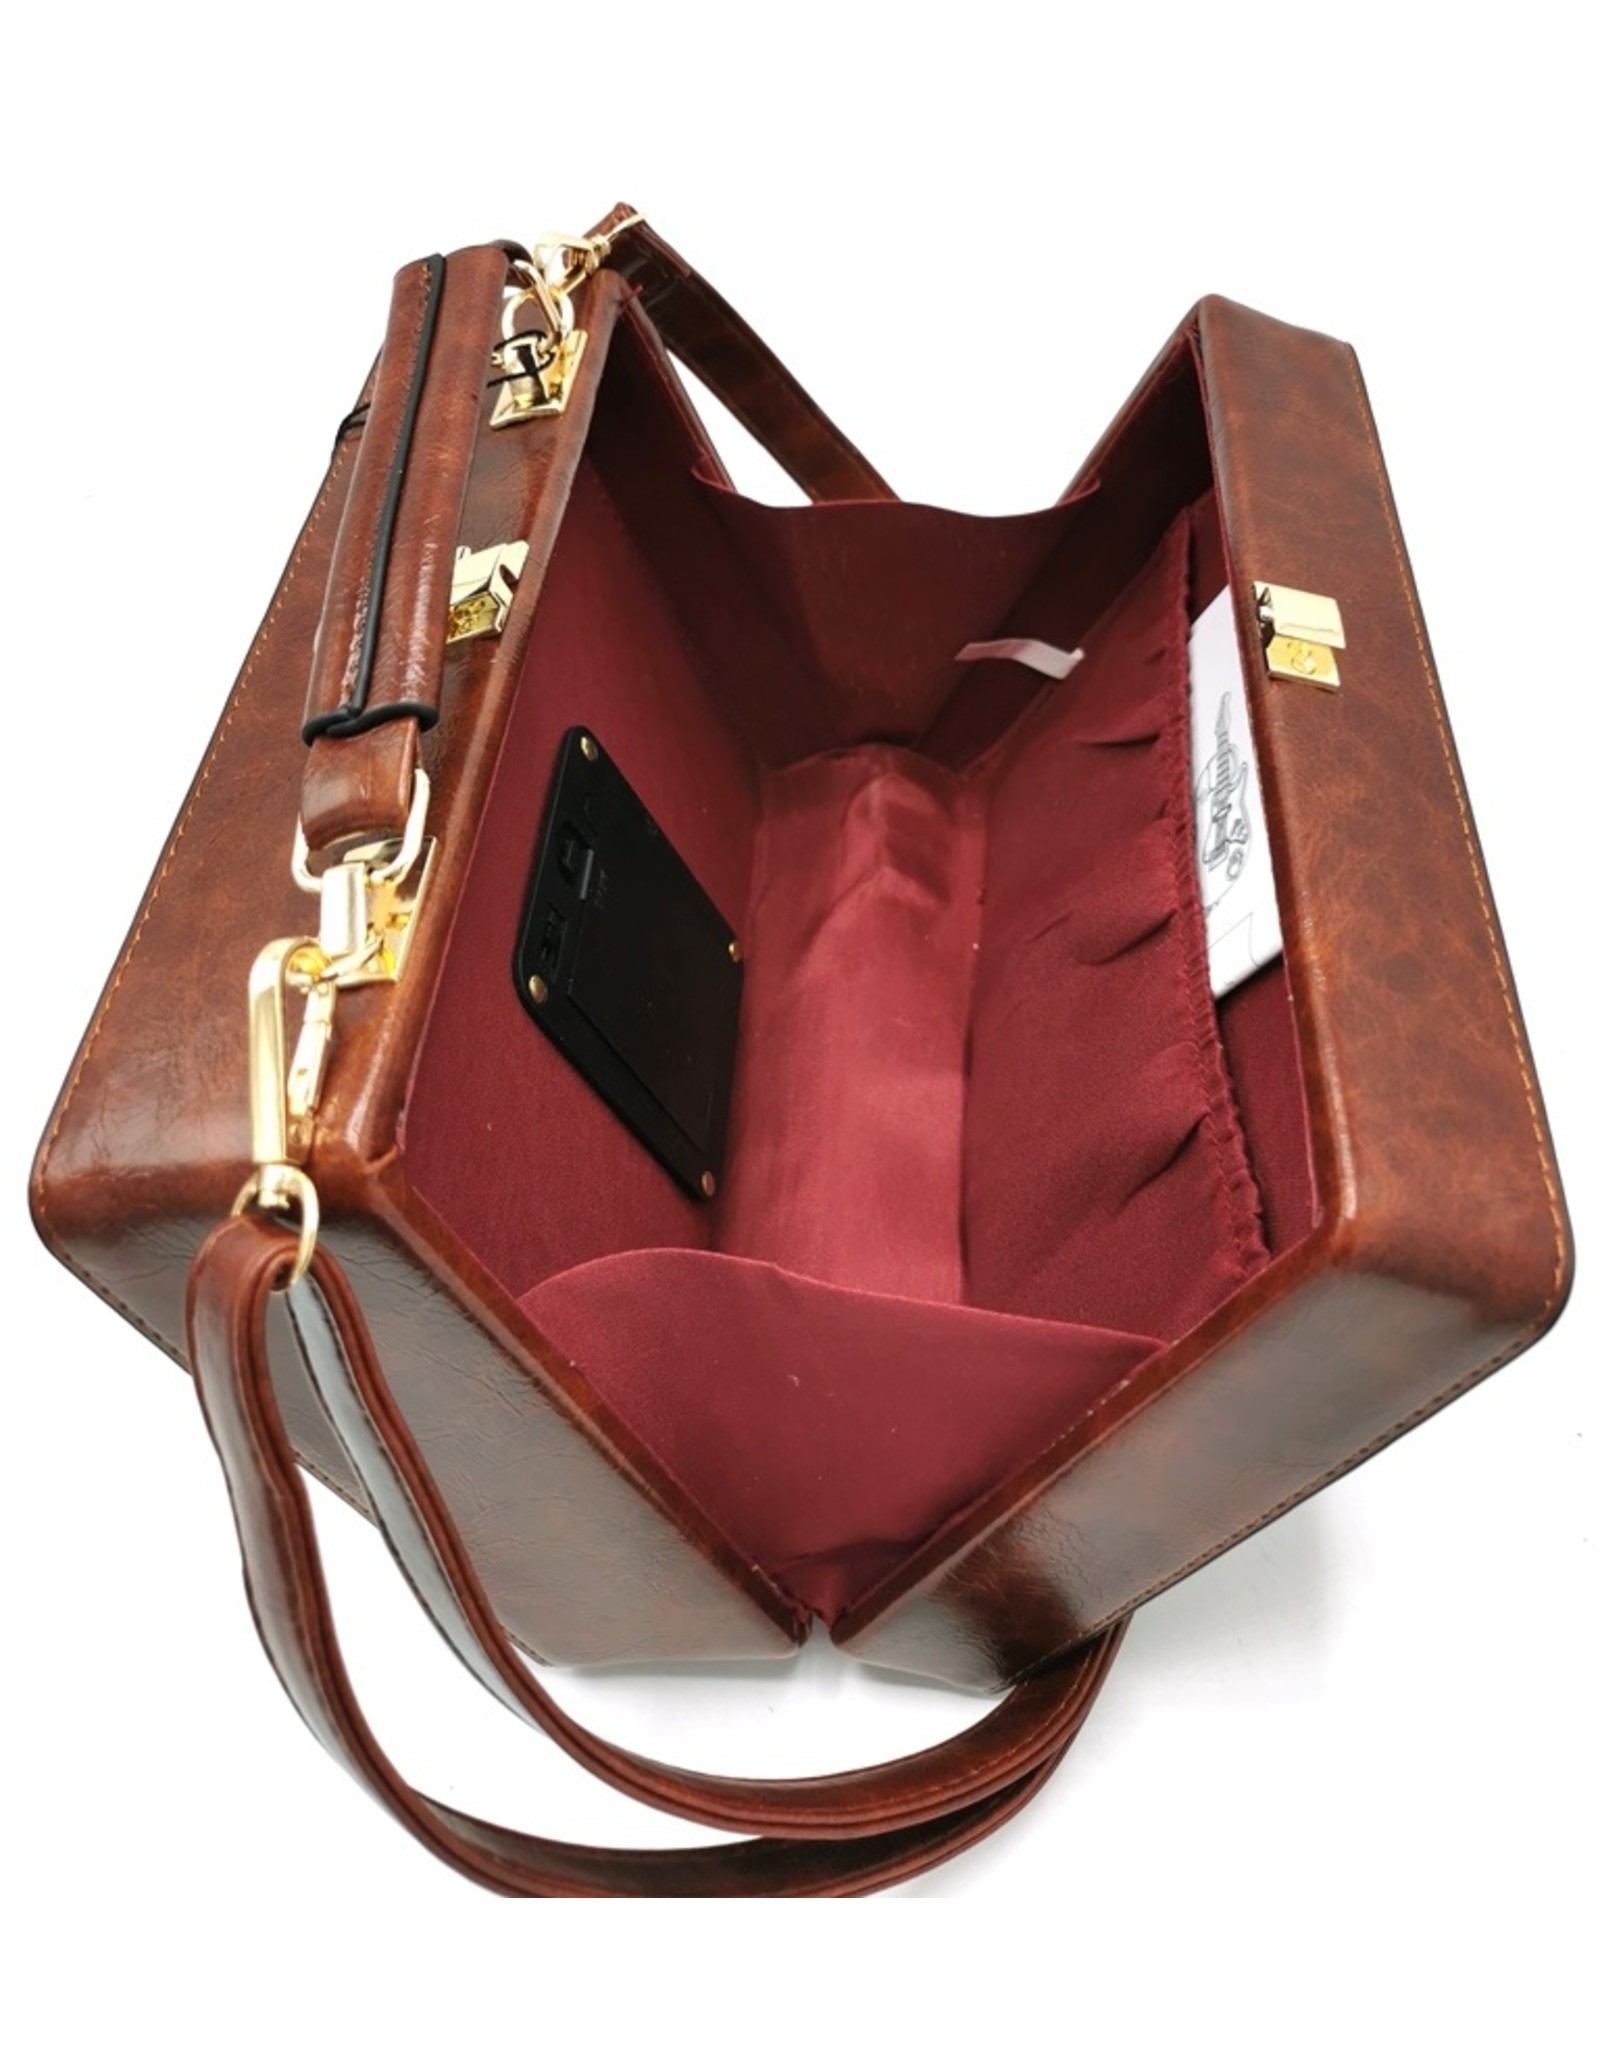 Magic Bags Fantasy bags - Retro Radio bag with Real Radio and Bluetooth brown